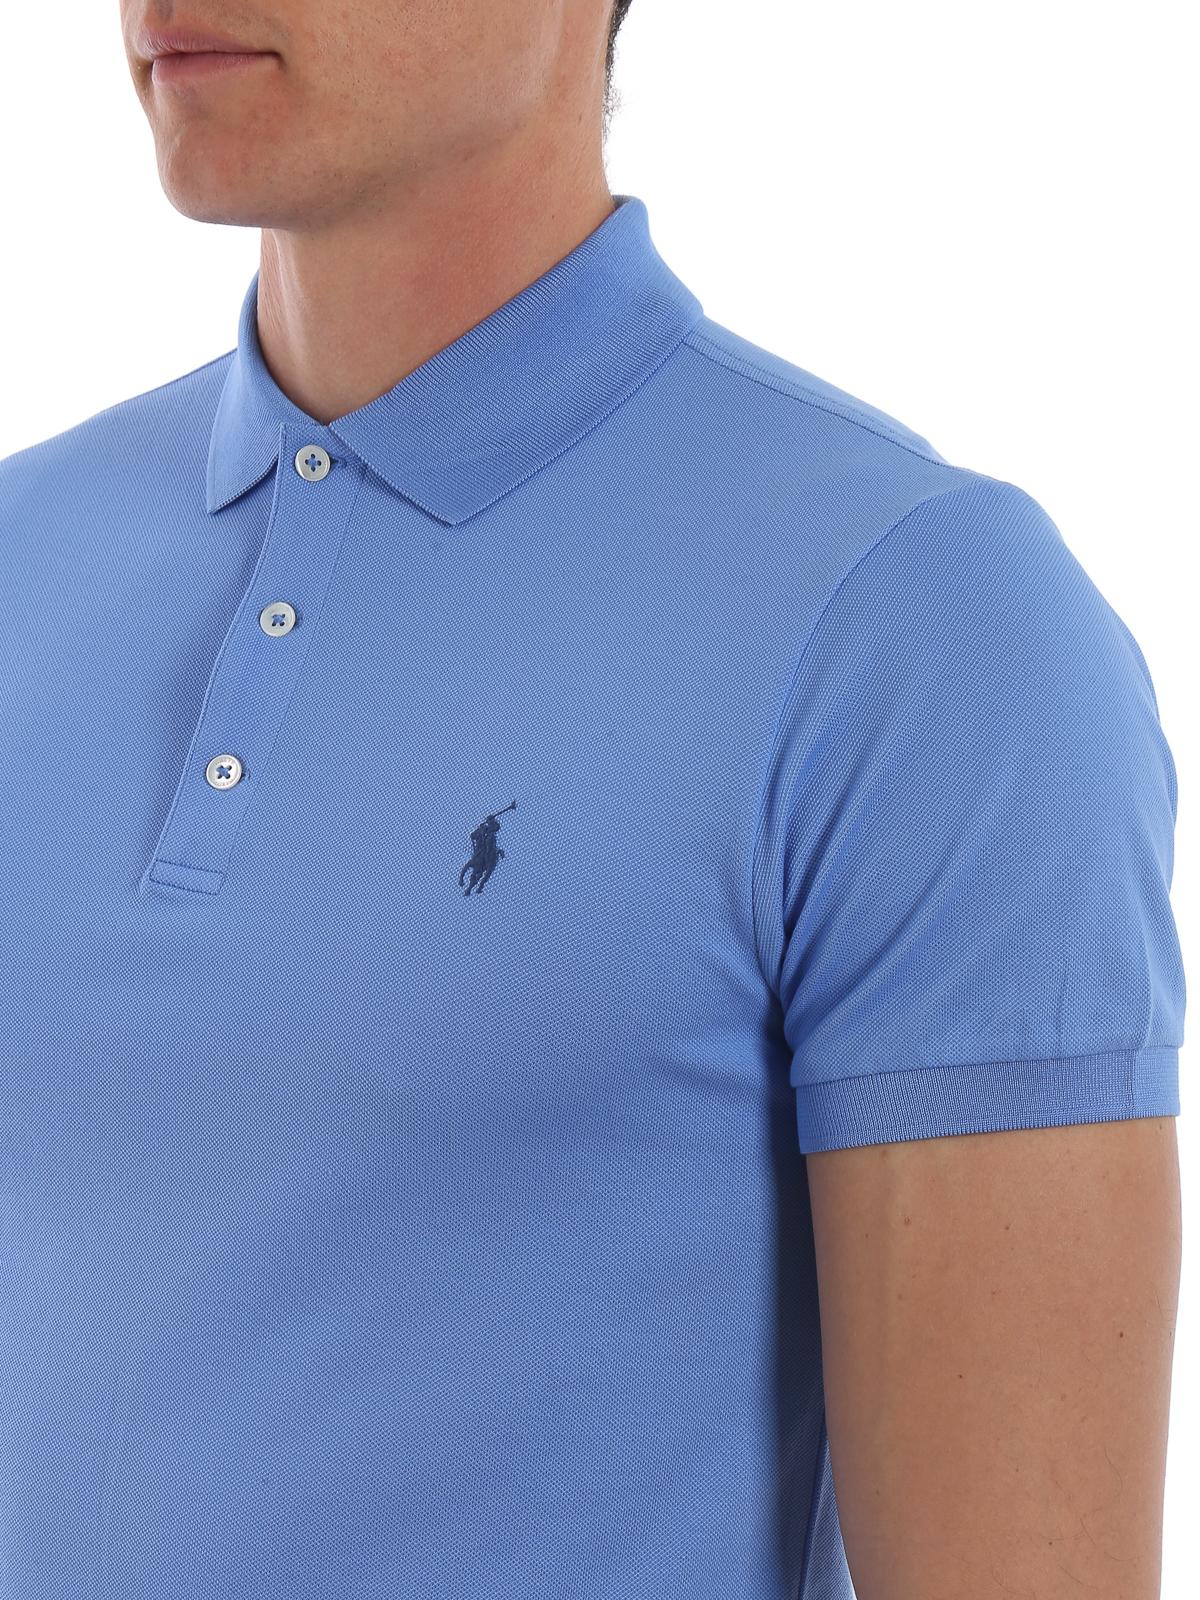 Polo Ralph Lauren Logo Light Blue Pique Cotton Polo Shirt for Men - Lyst